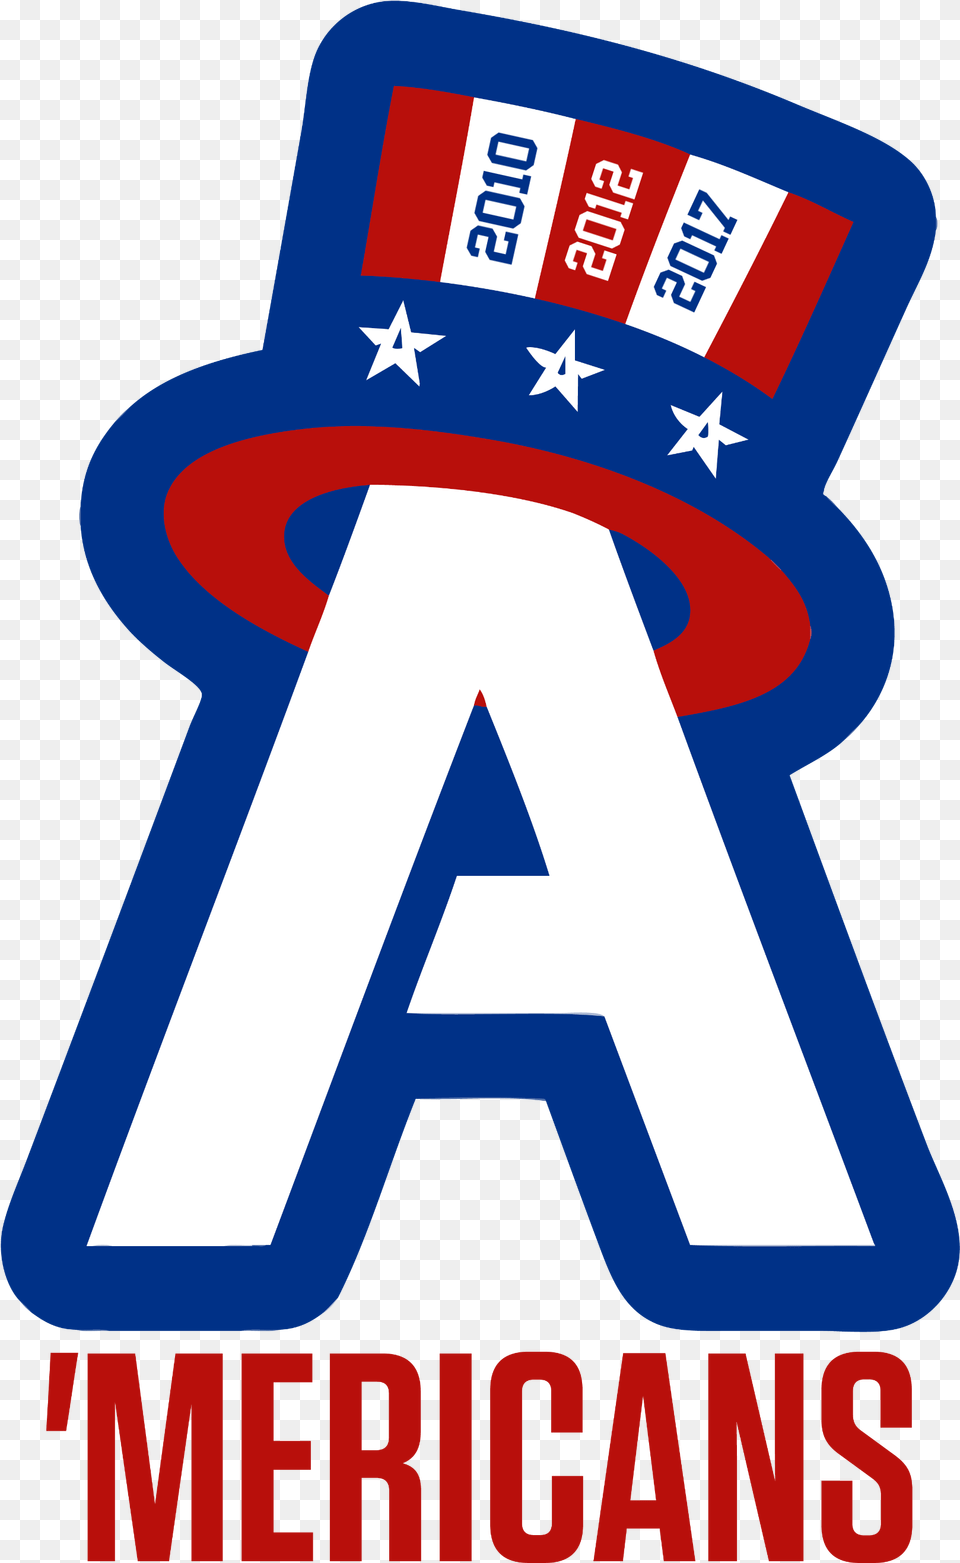 Arrogant Americans The Oil Fantasy Football And Veteran Americans Logo, Badge, Symbol, Text Png Image